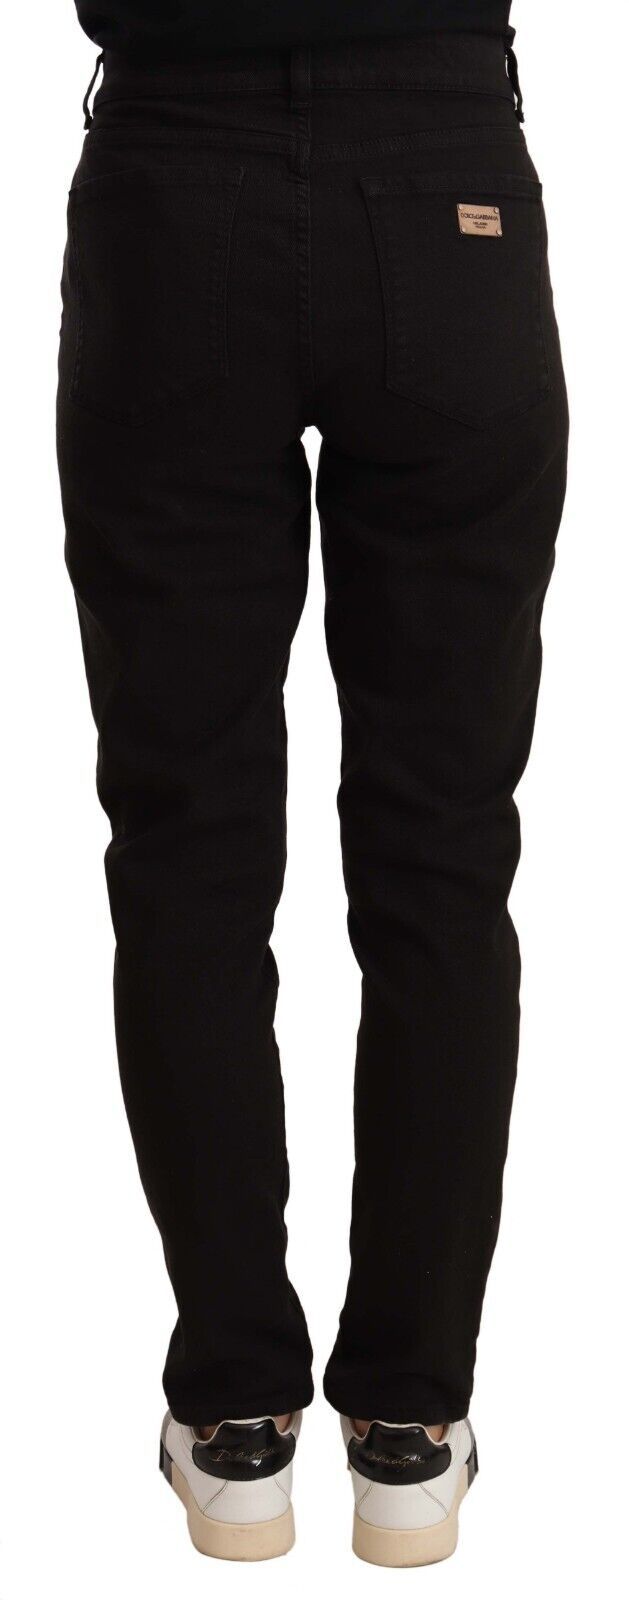 Elegant Slim-Fit Black Skinny Jeans